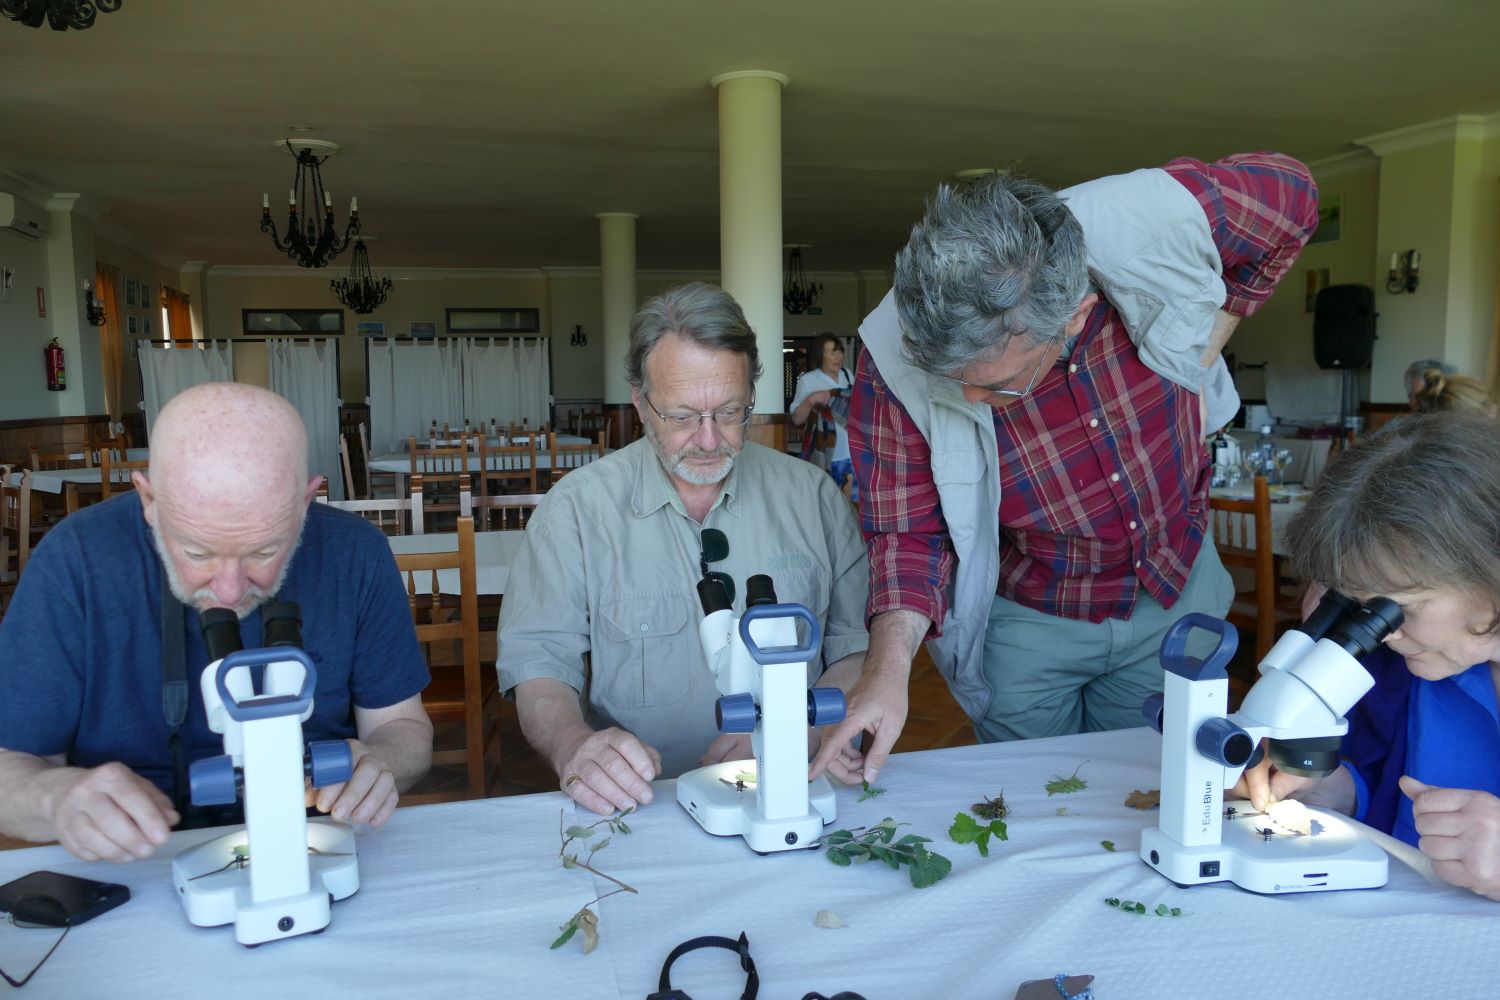 Looking at microscopes